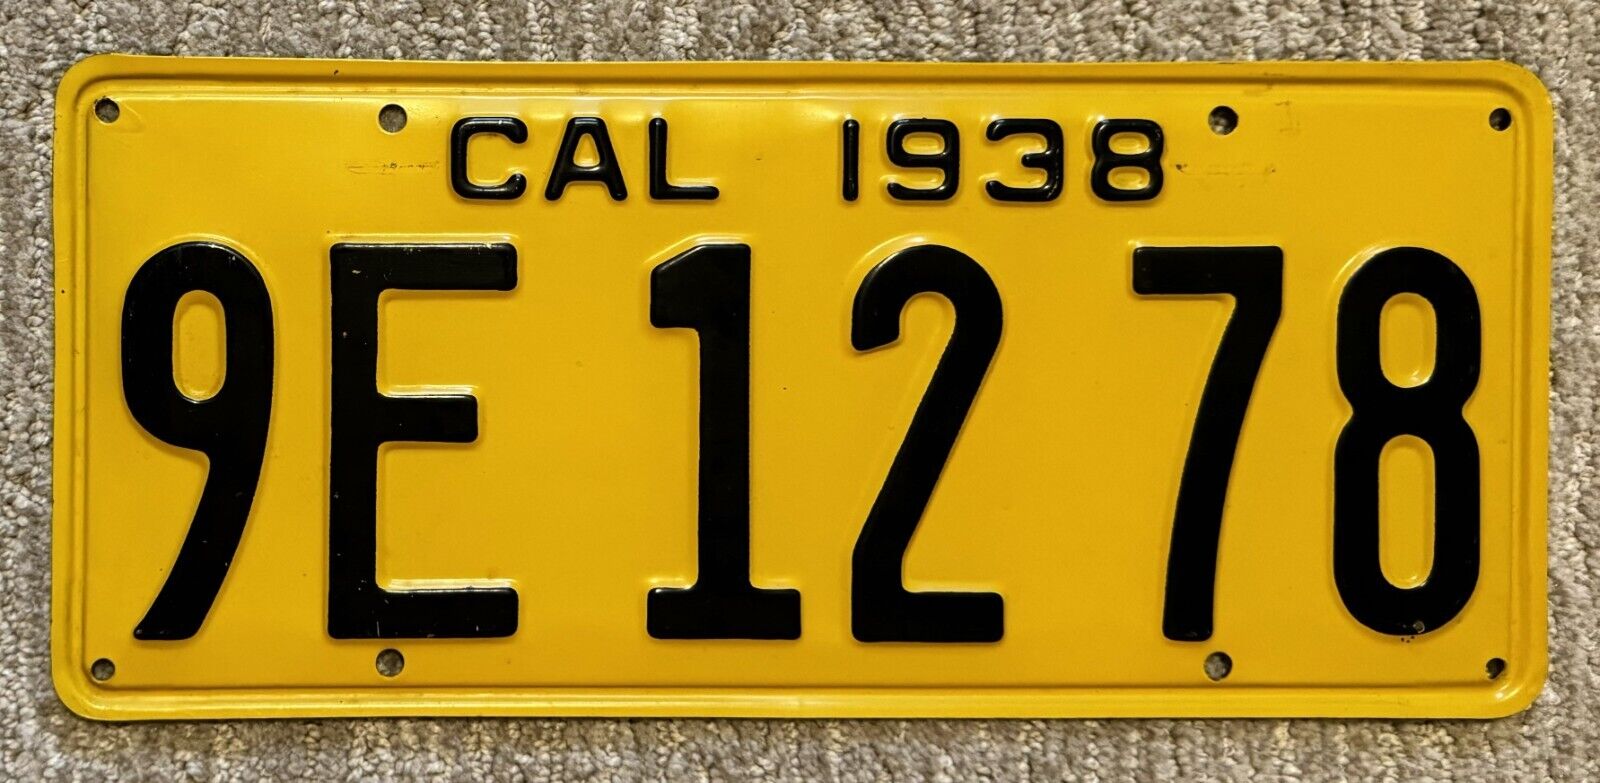 1938 California License Plate - Nice Original Paint